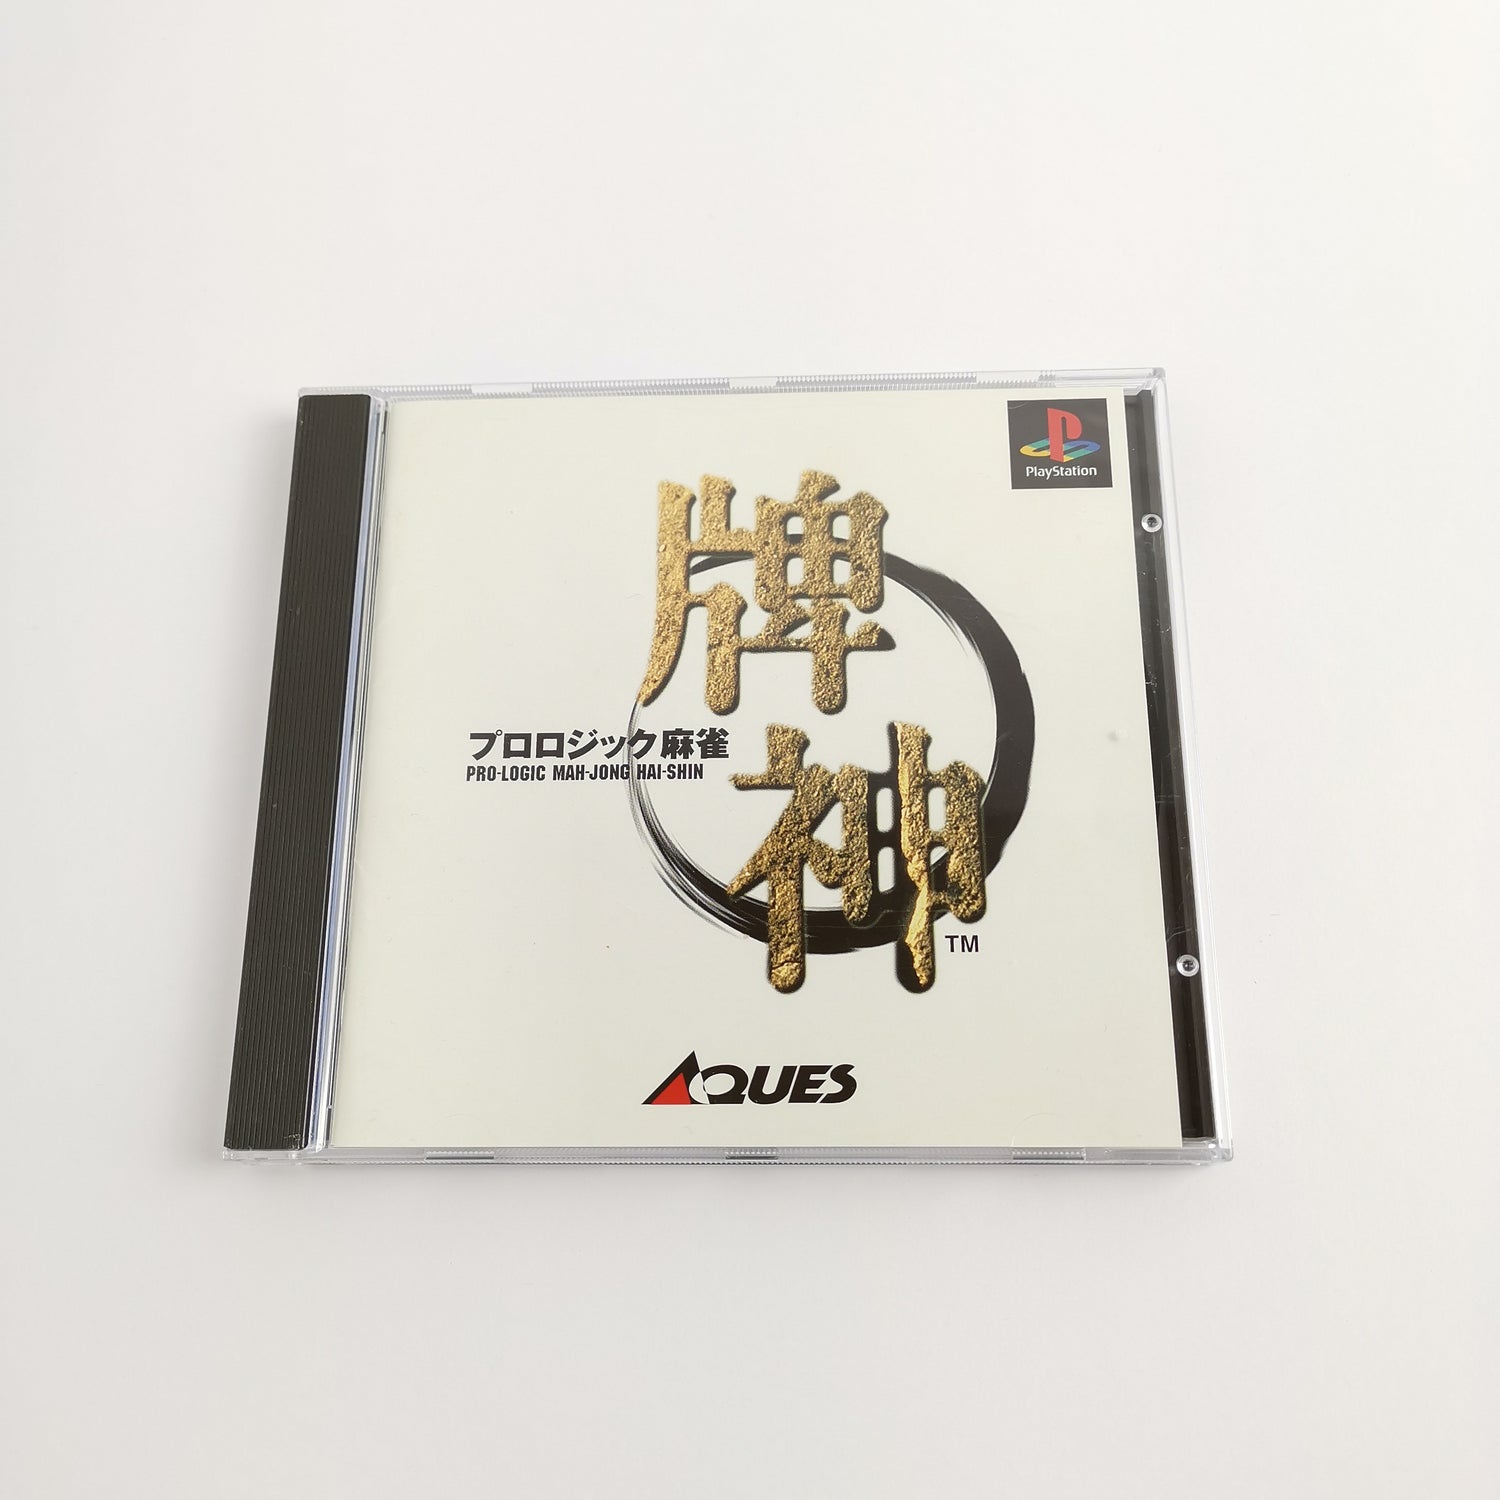 Sony Playstation 1 Game: Pro-Logic Mah-Jong Hai-Sin PS1 PSX - OVP NTSC-J Japan